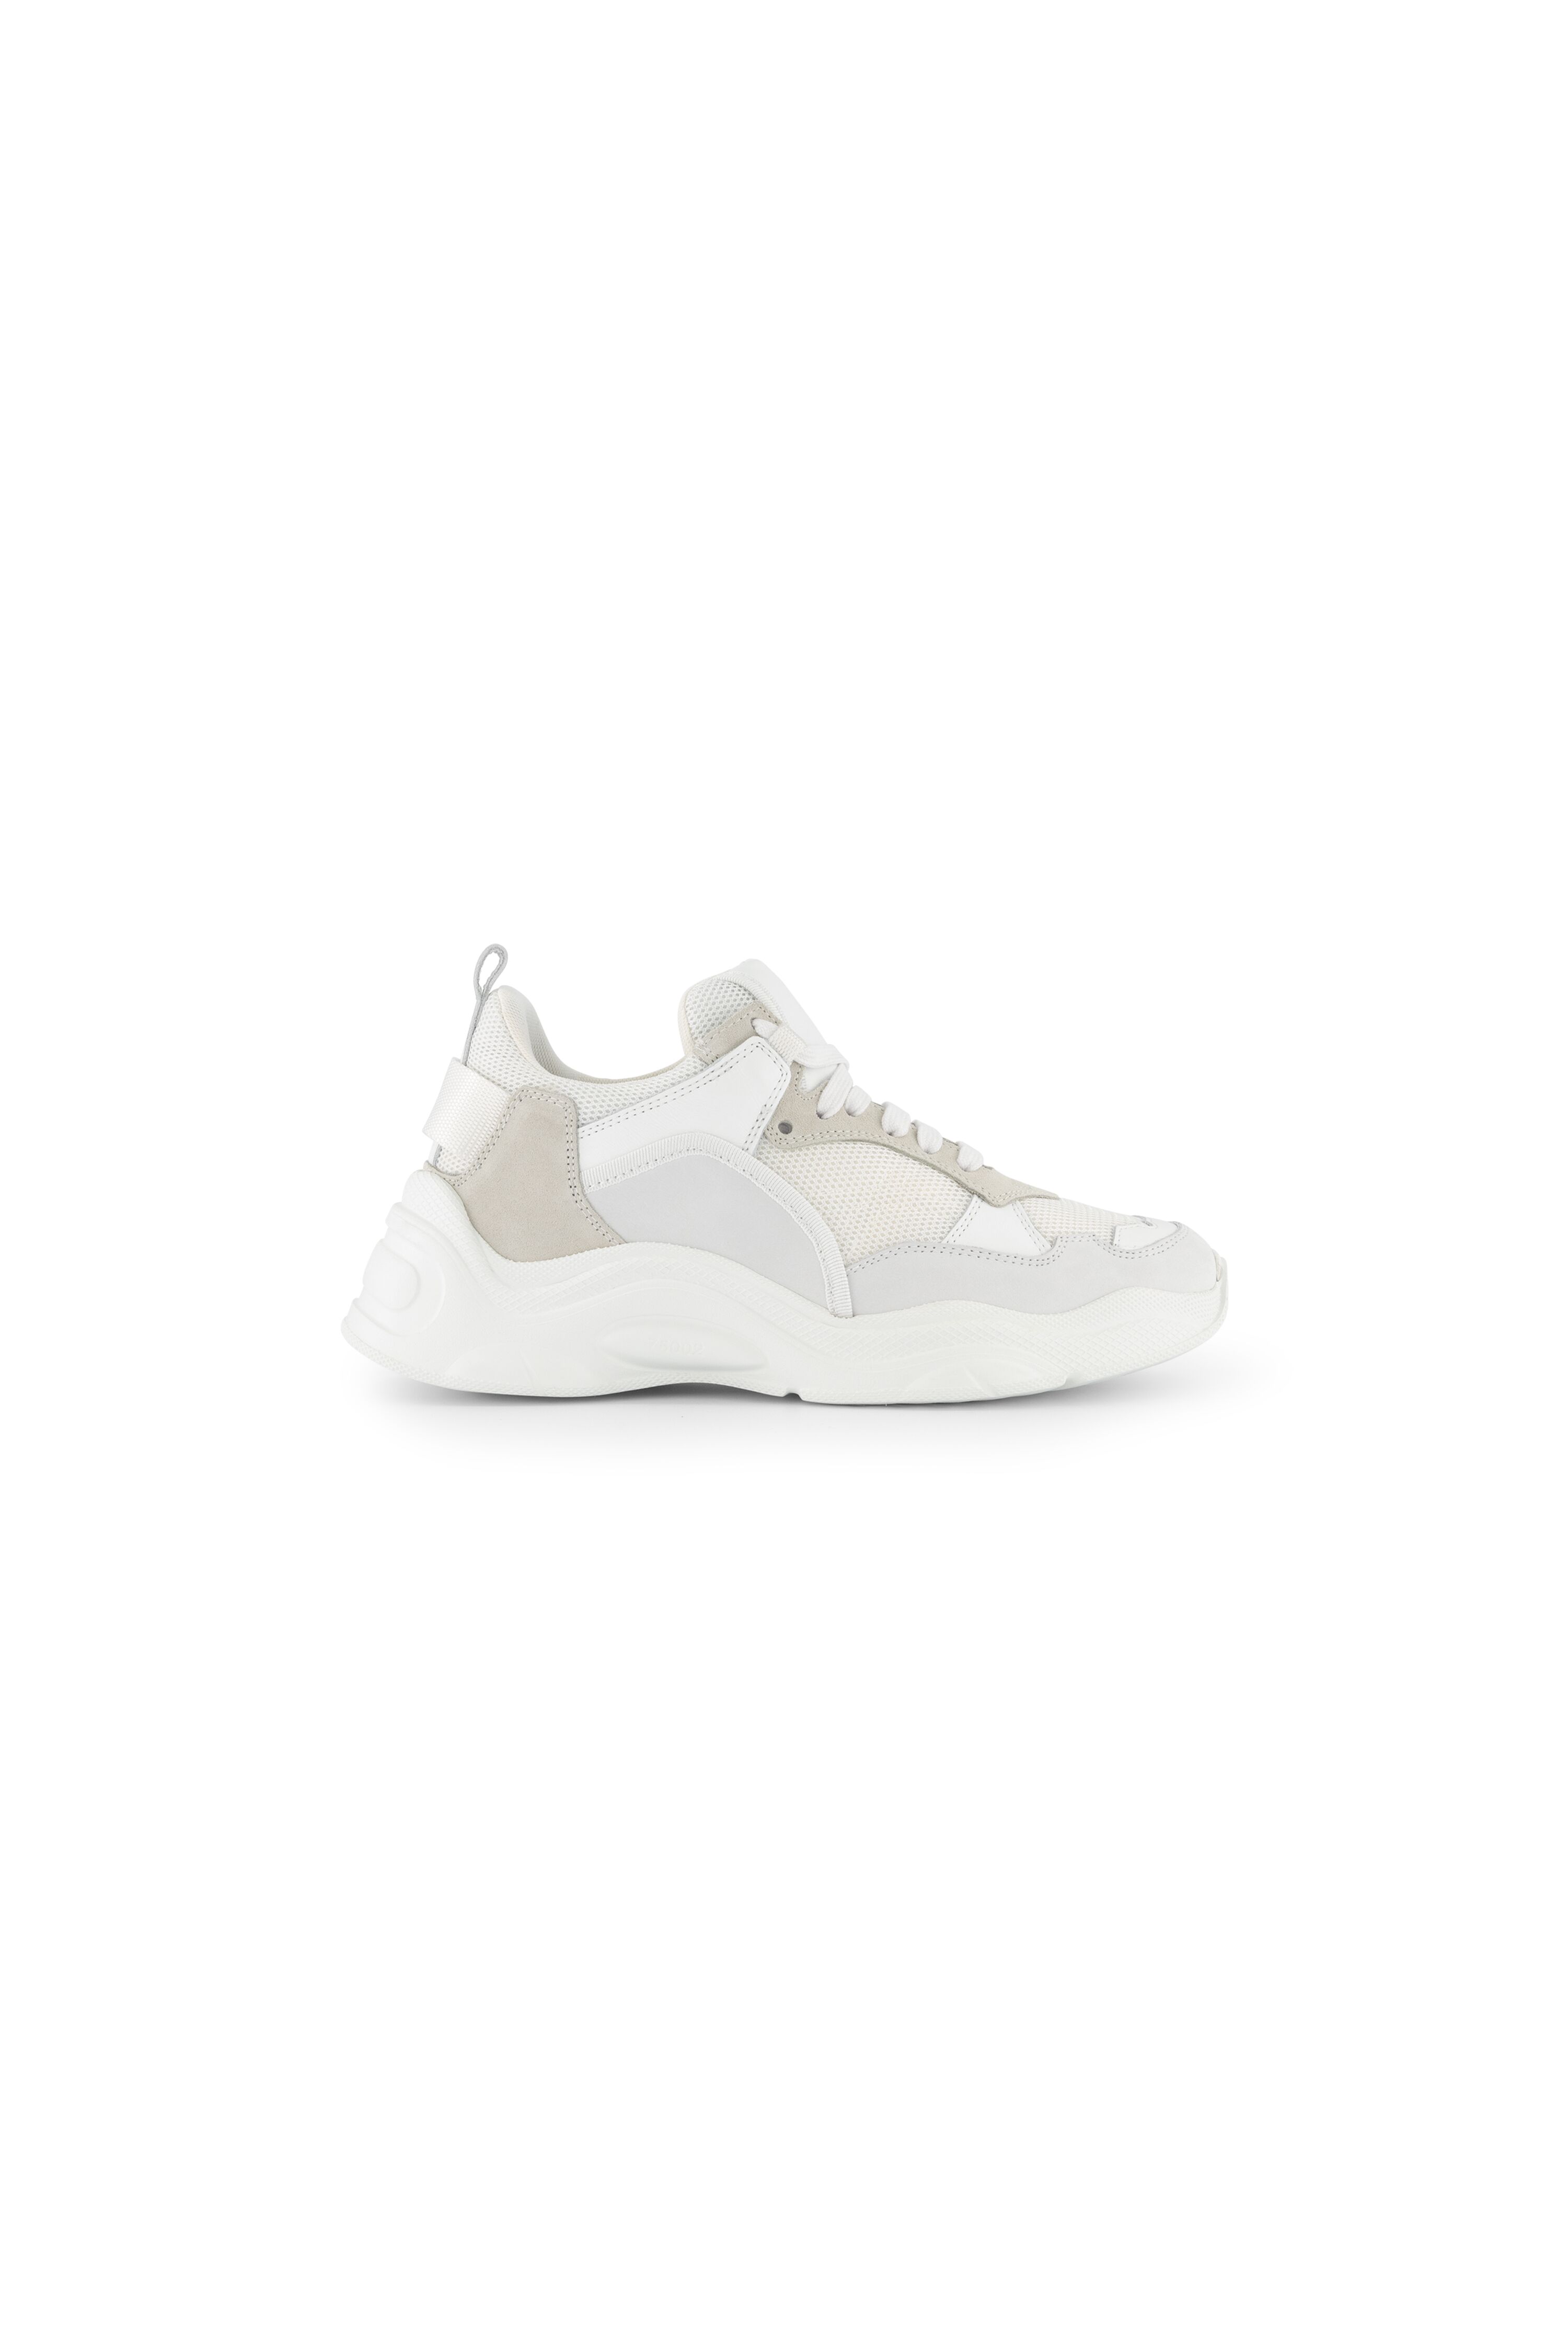 æggelederne Hassy frugter Iro Paris Curverunner Sneaker White Beige - WM40CURVERUNNER WHI15 | Bloom  Fashion